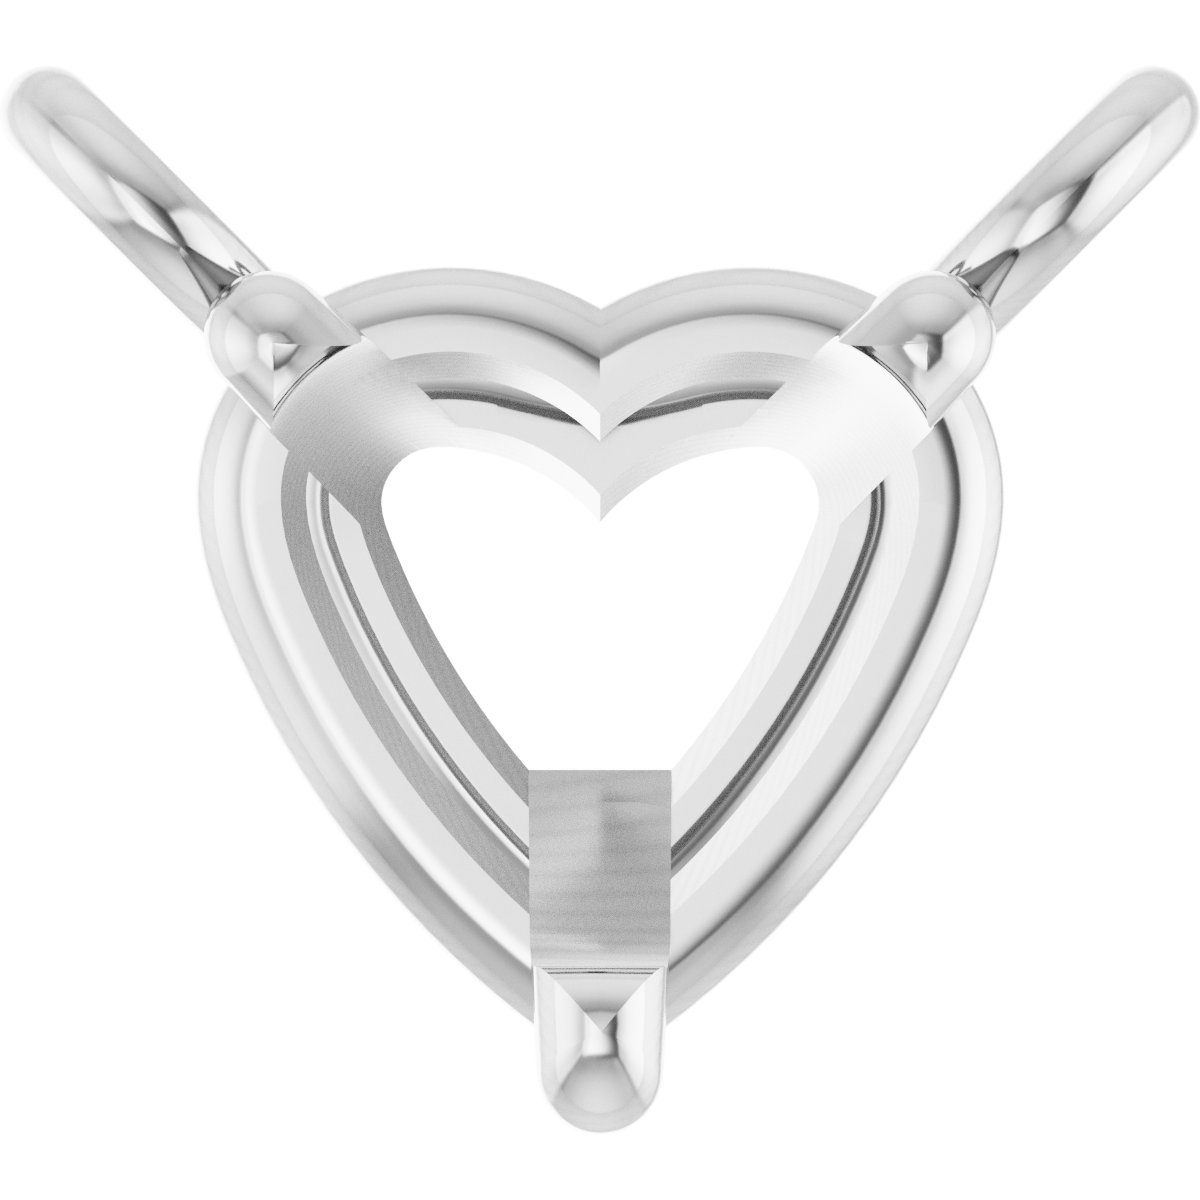 Platinum 4x4 mm Heart 3-Prong Solitaire Necklace Center